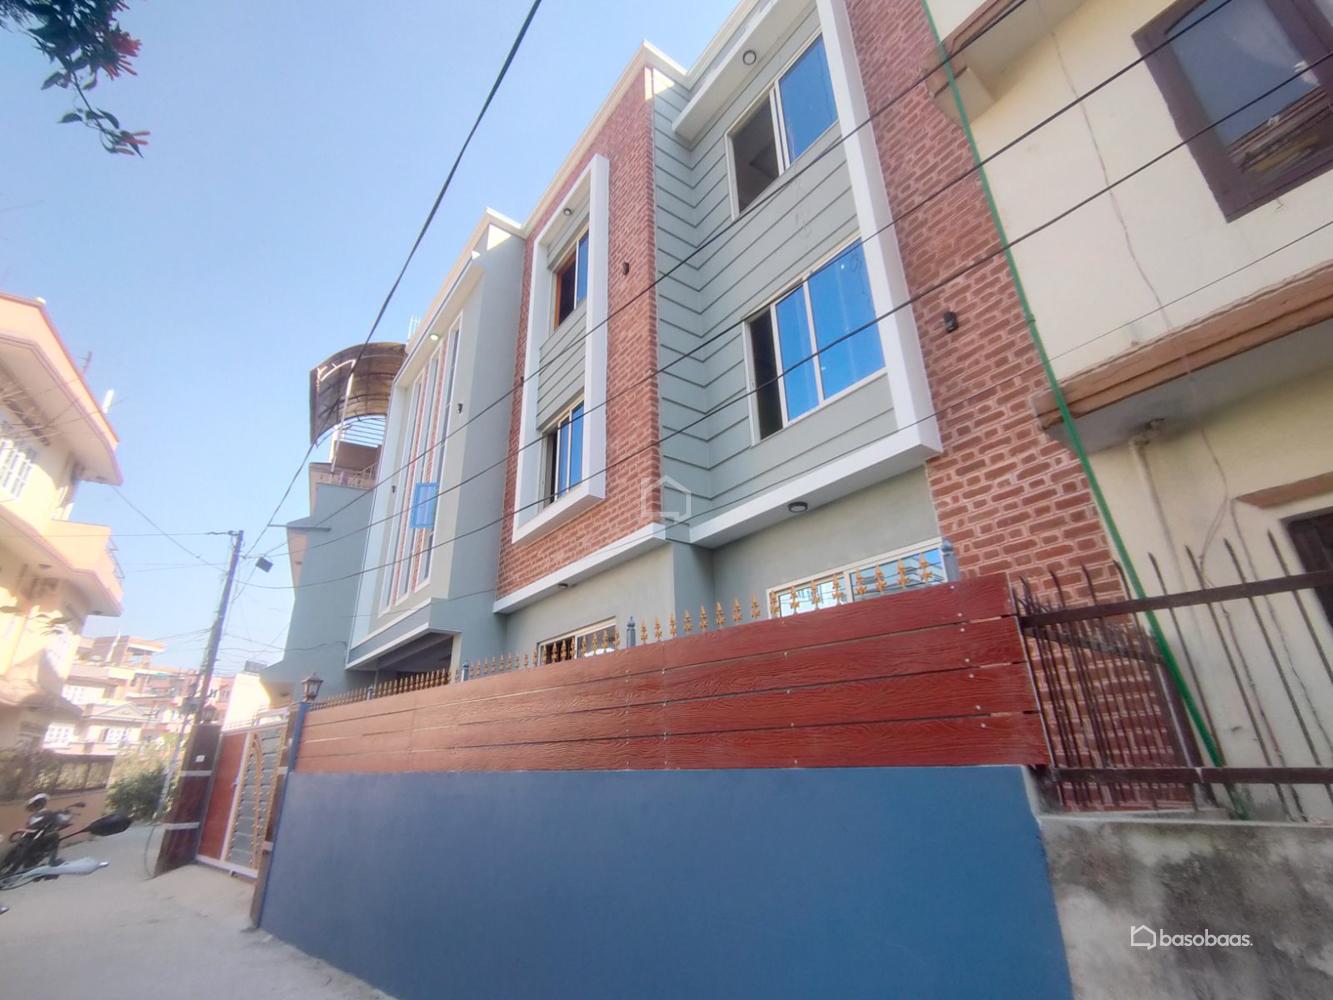 Residental : House for Sale in Nagarjun, Kathmandu Image 1